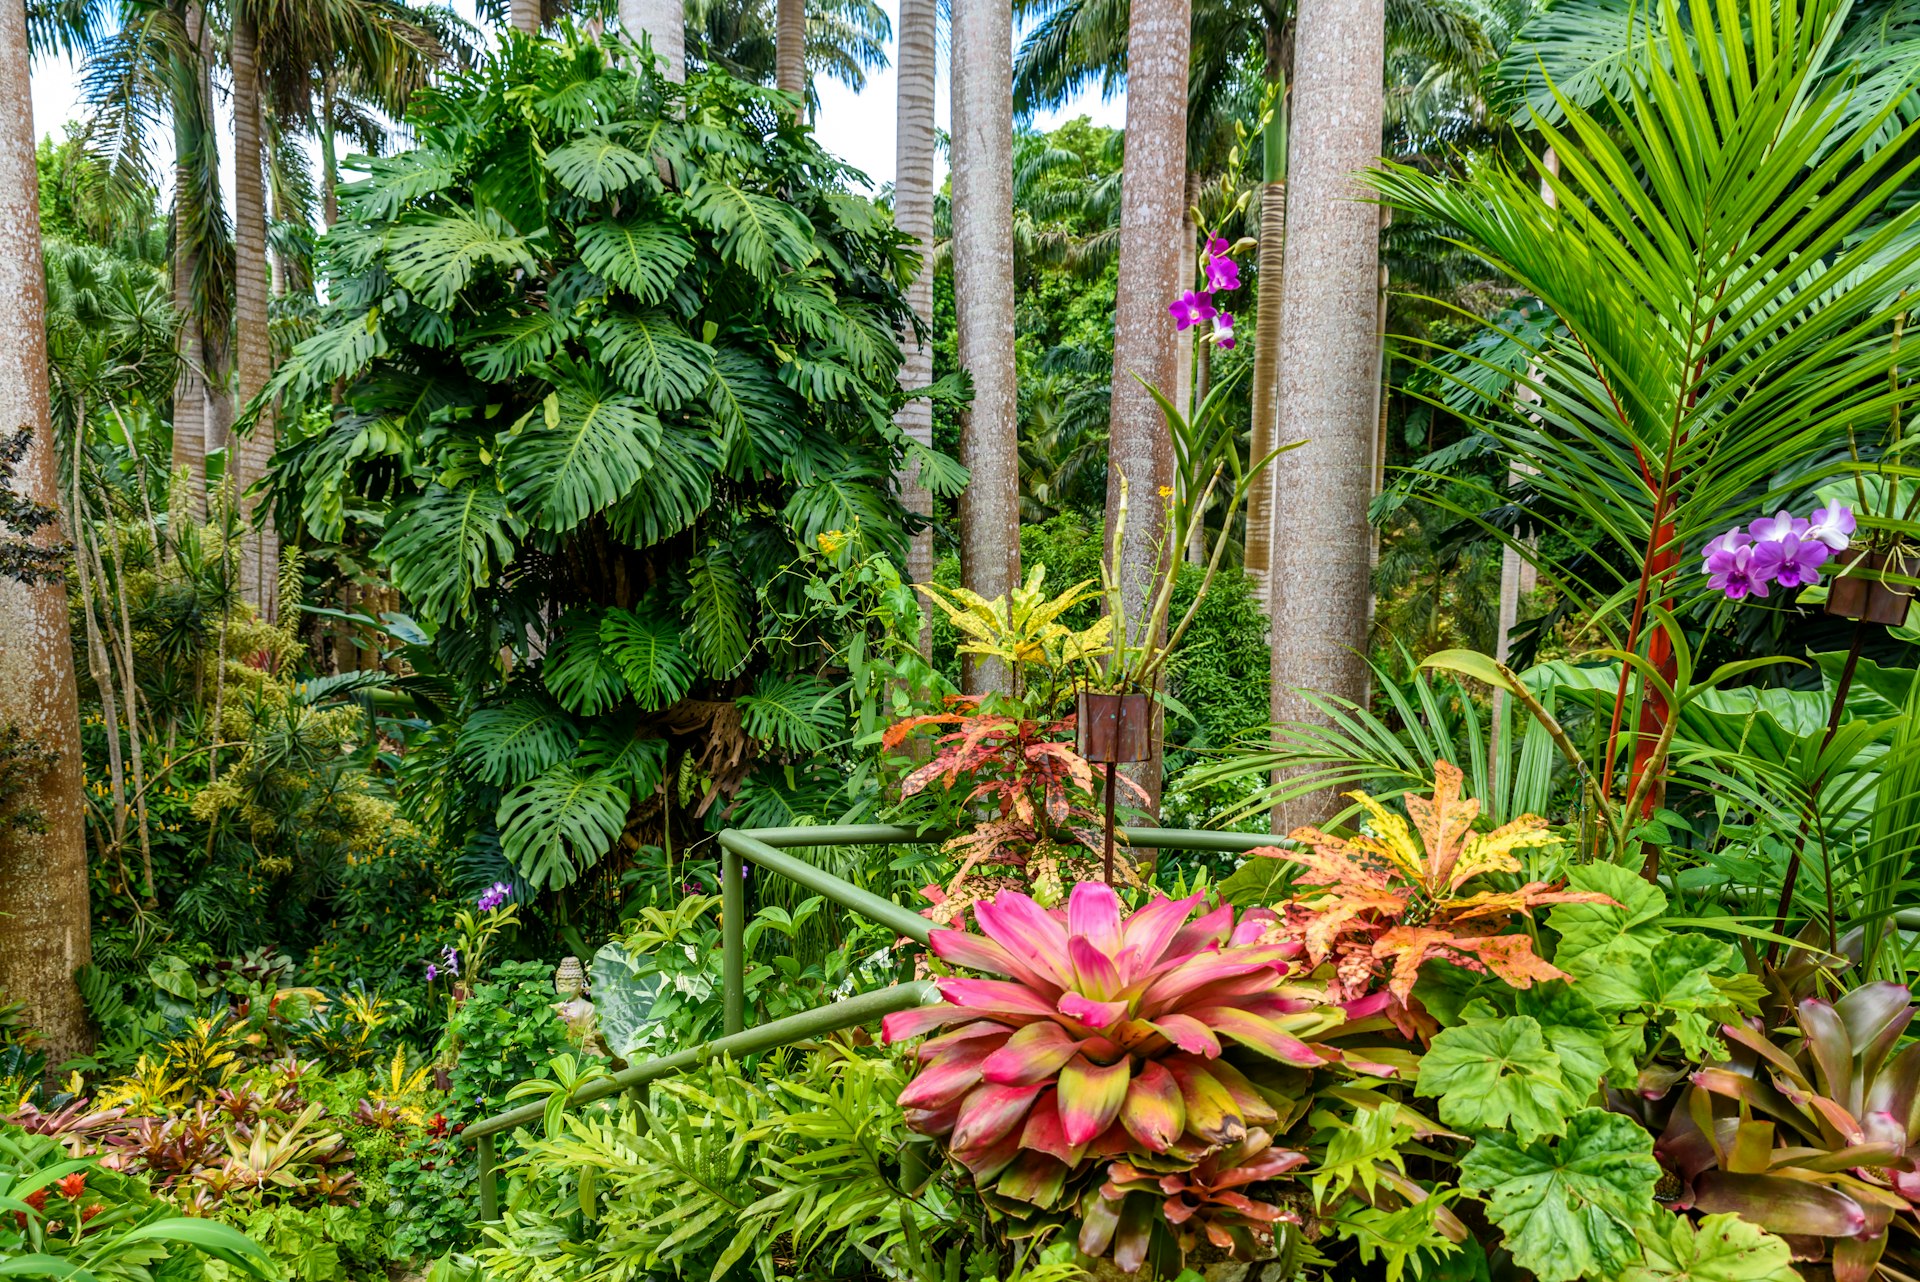 Hunte's Botanical Garden on the Caribbean island of Barbados